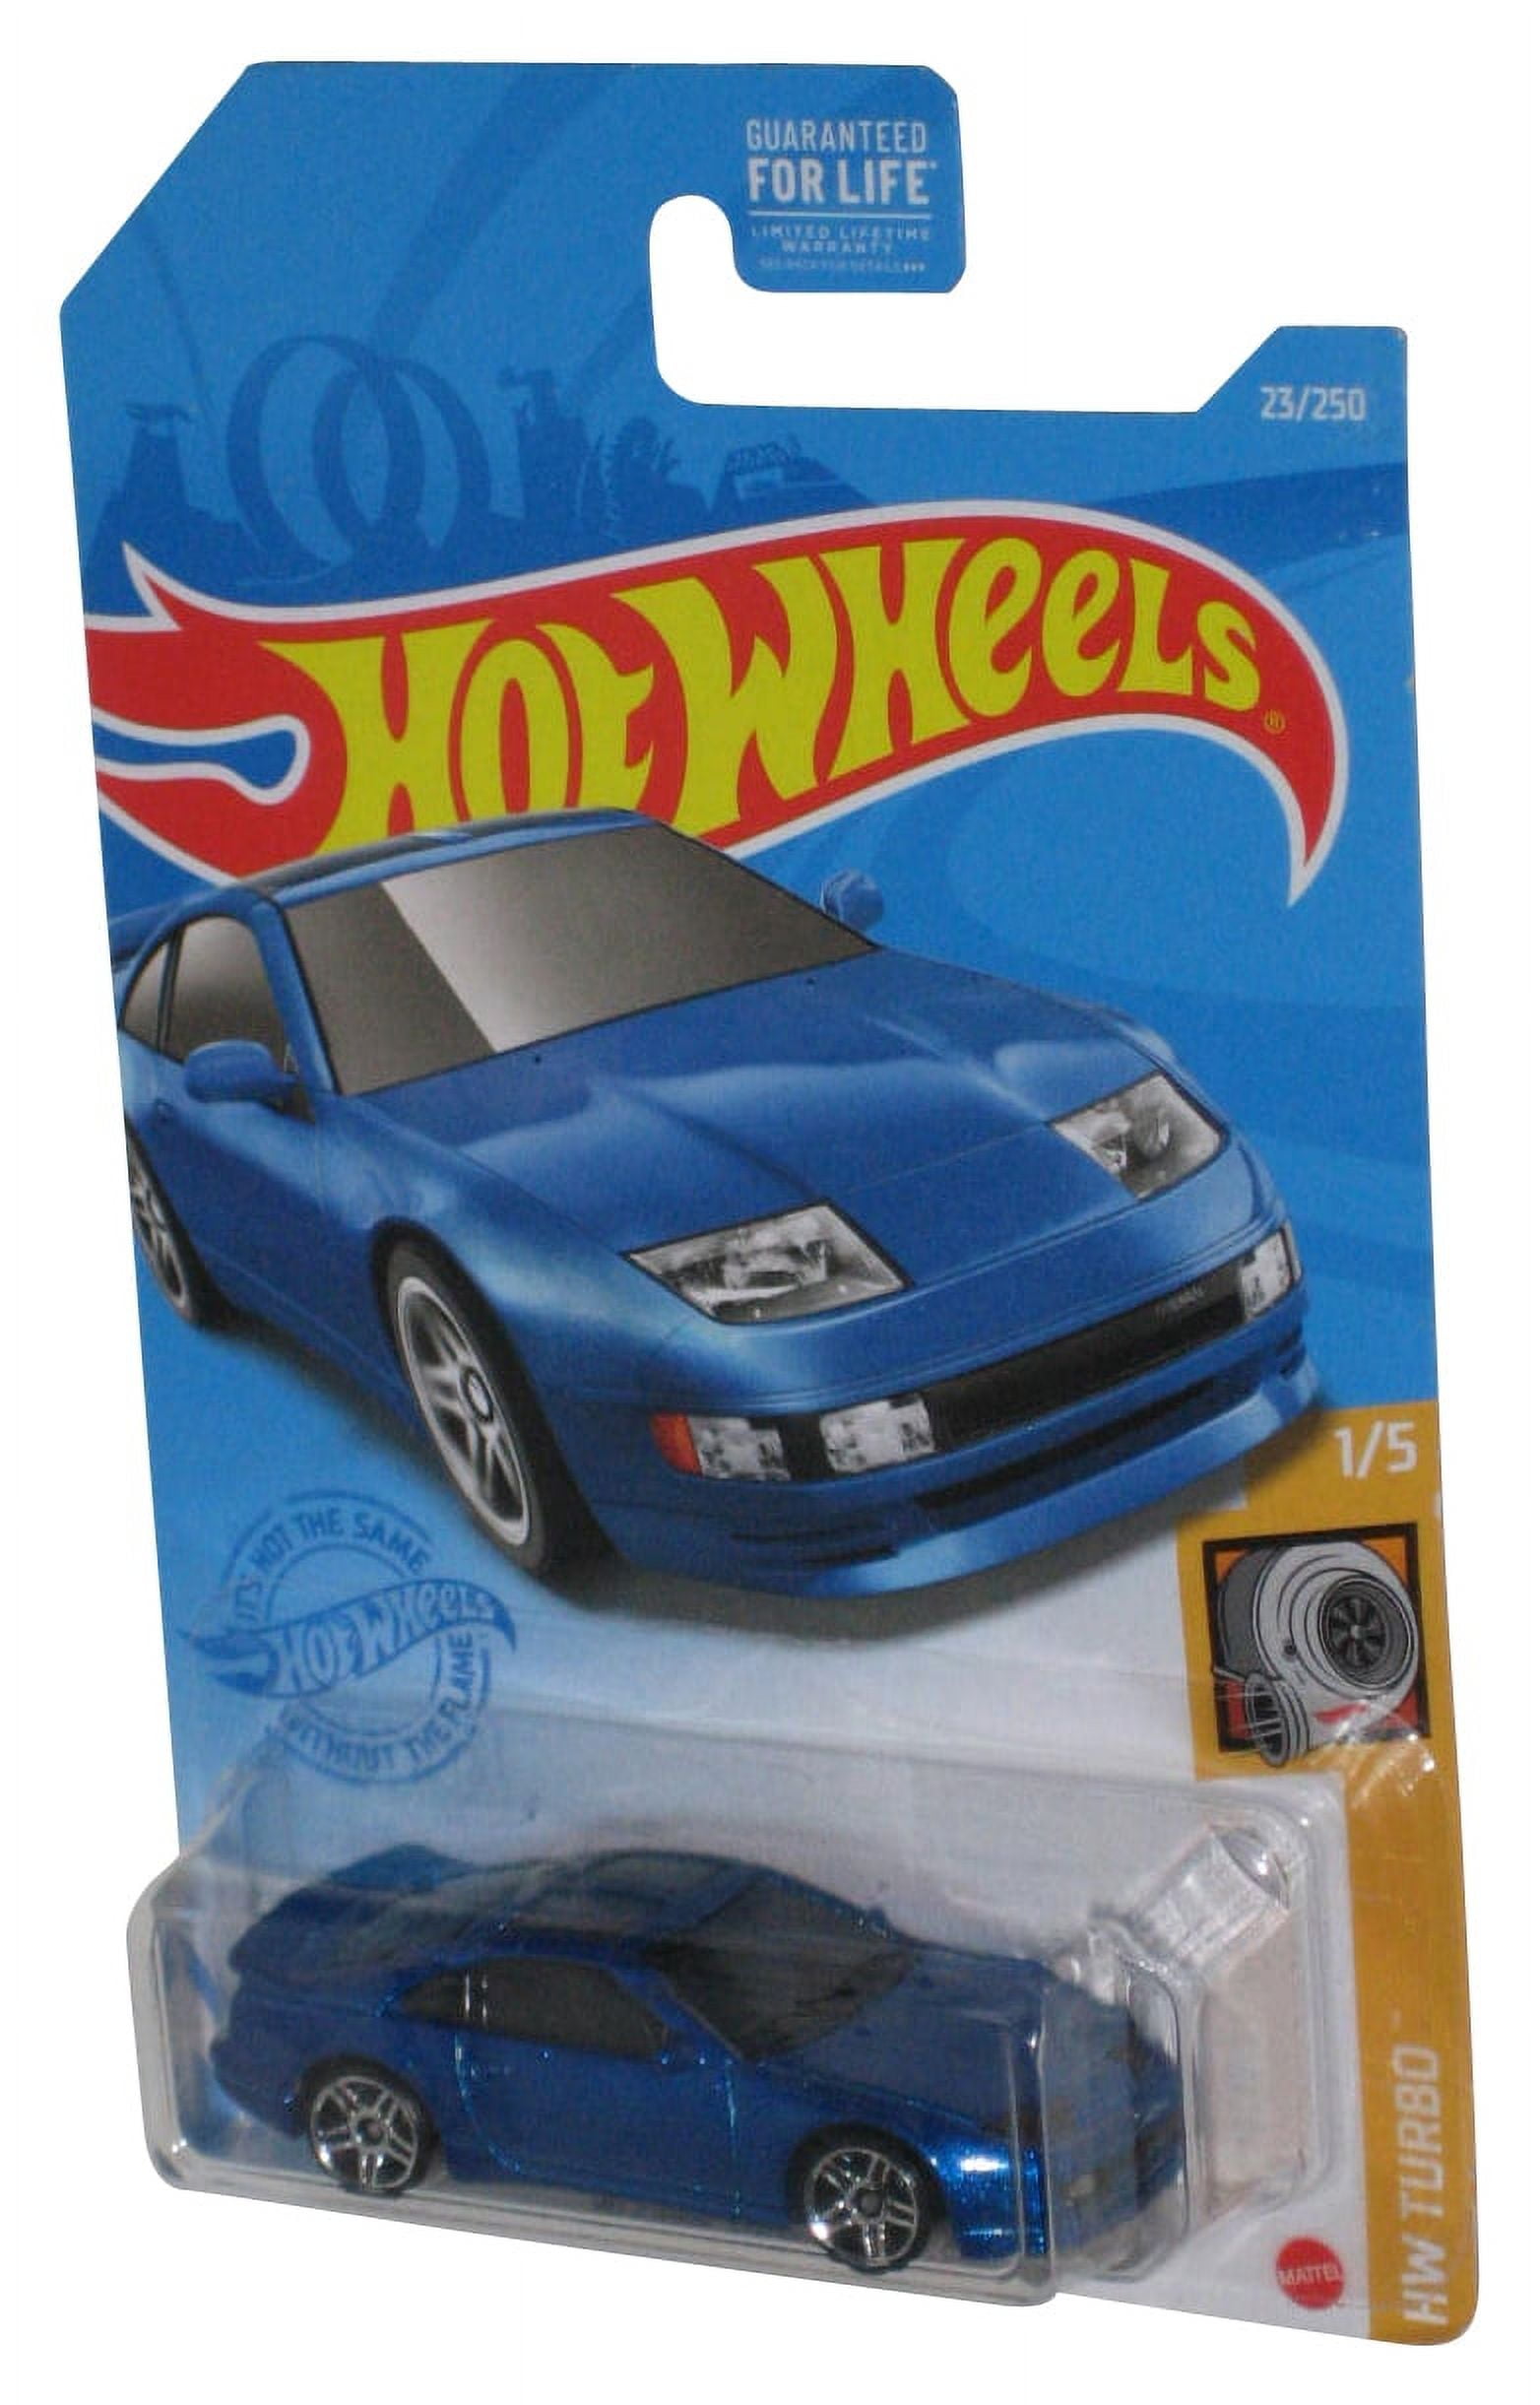 Hot Wheels Nissan 300ZX Twin Turbo (2020) HW Turbo 1/5 Blue Toy Car 23/250